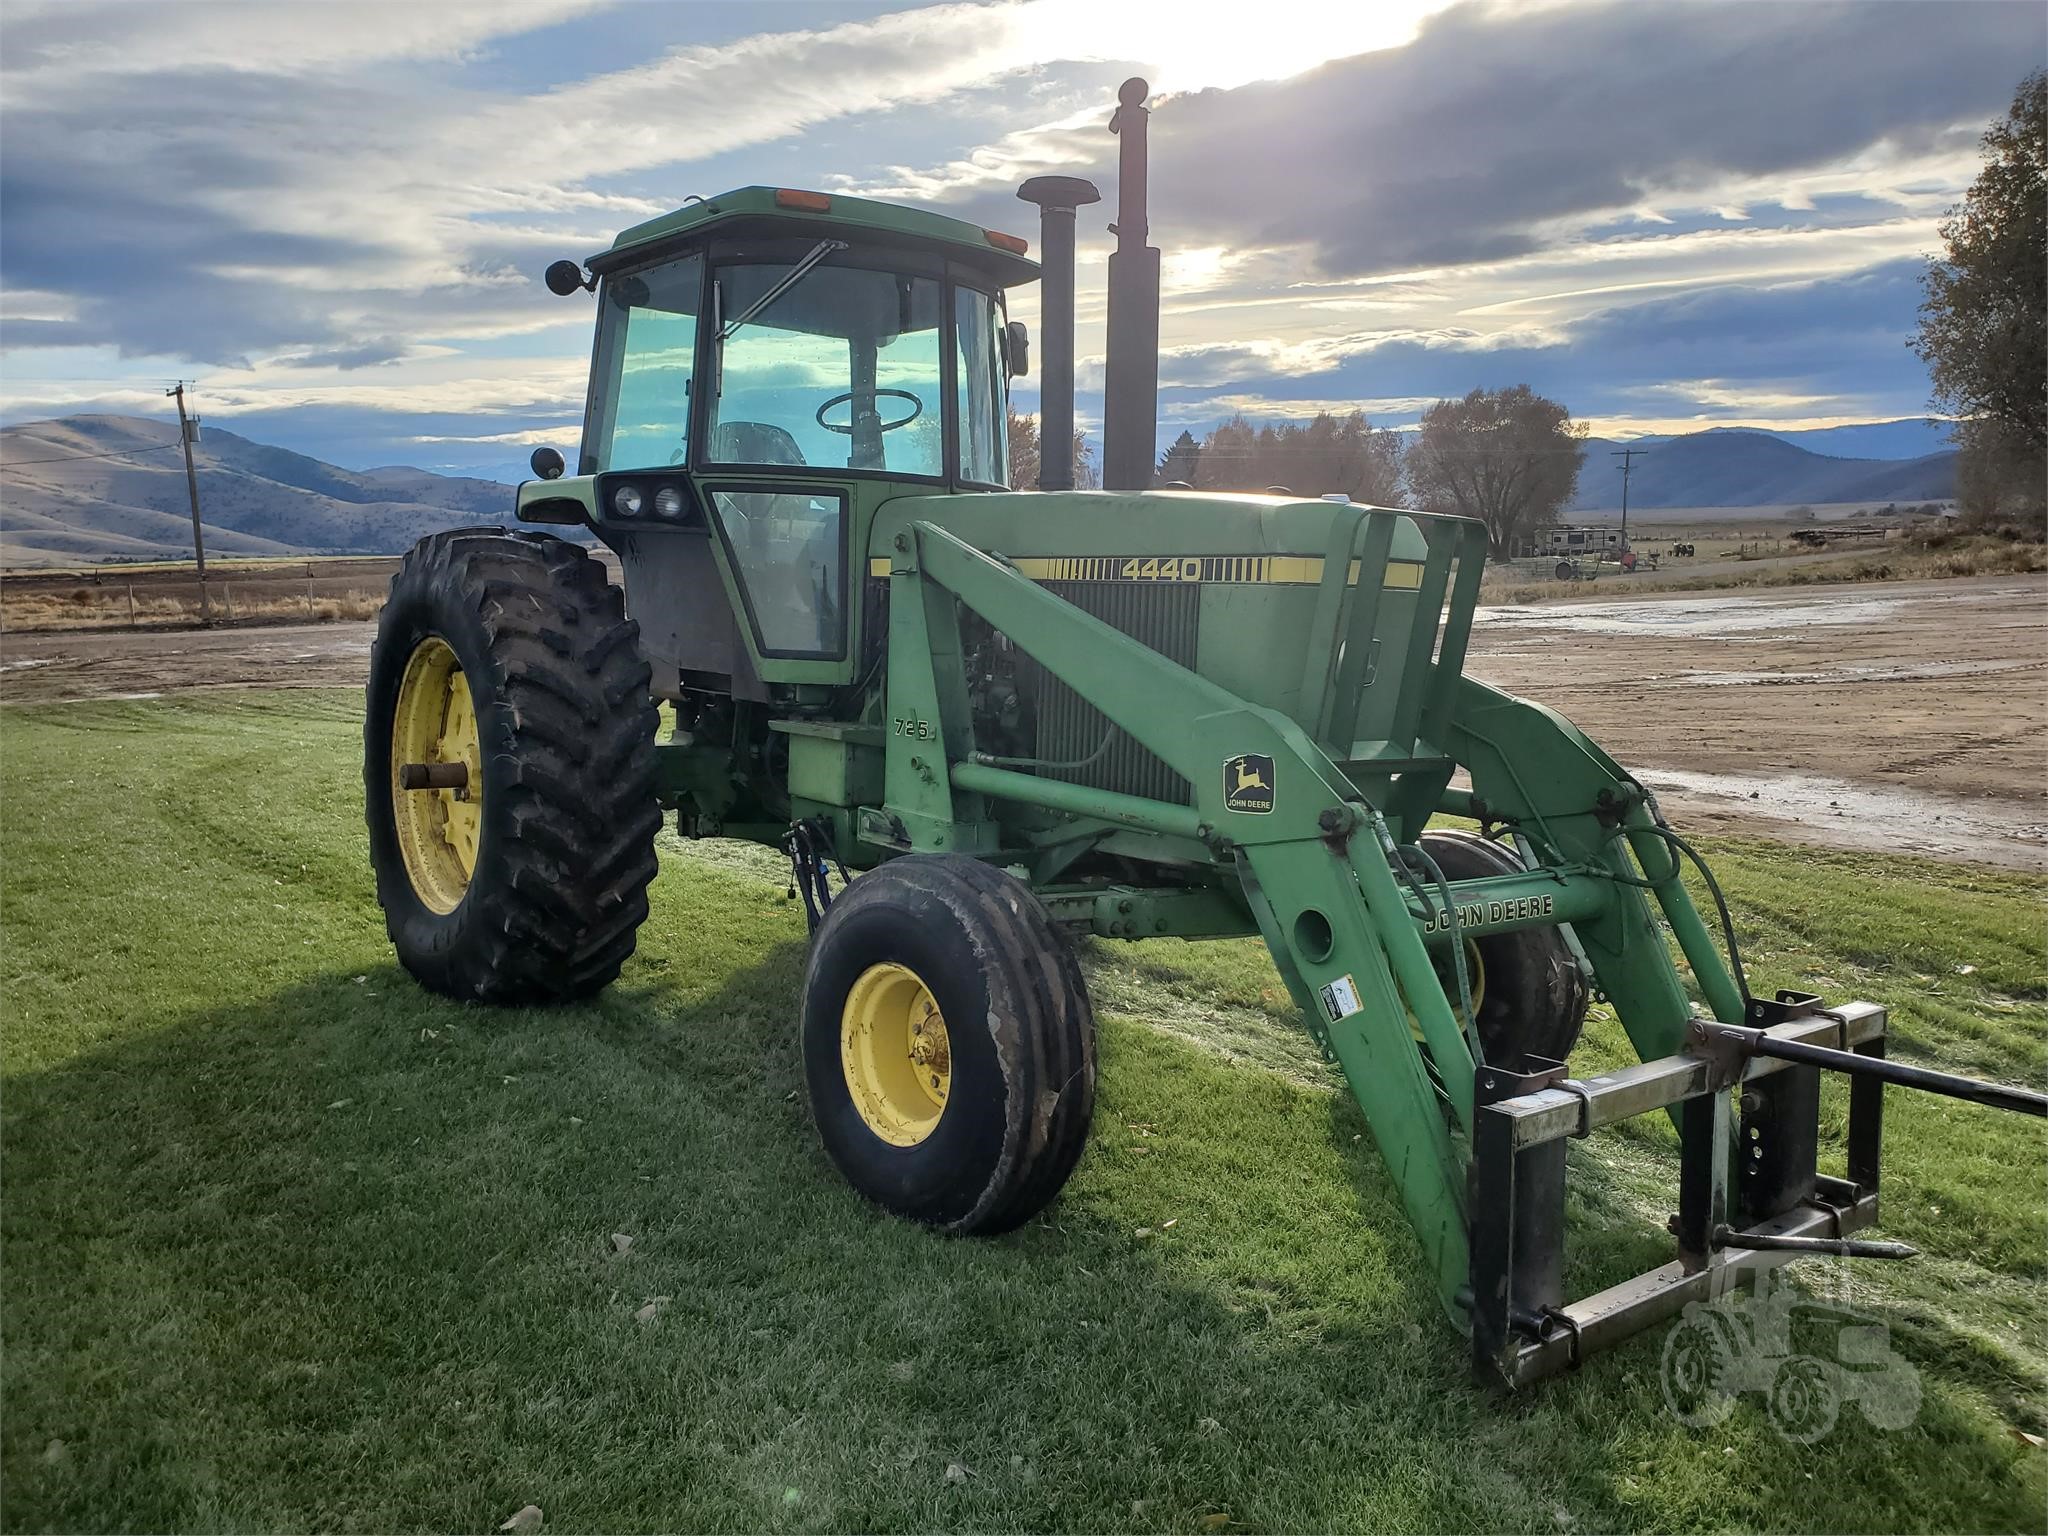 JOHN DEERE 4440 For Sale In Ronan, Montana | TractorHouse.com